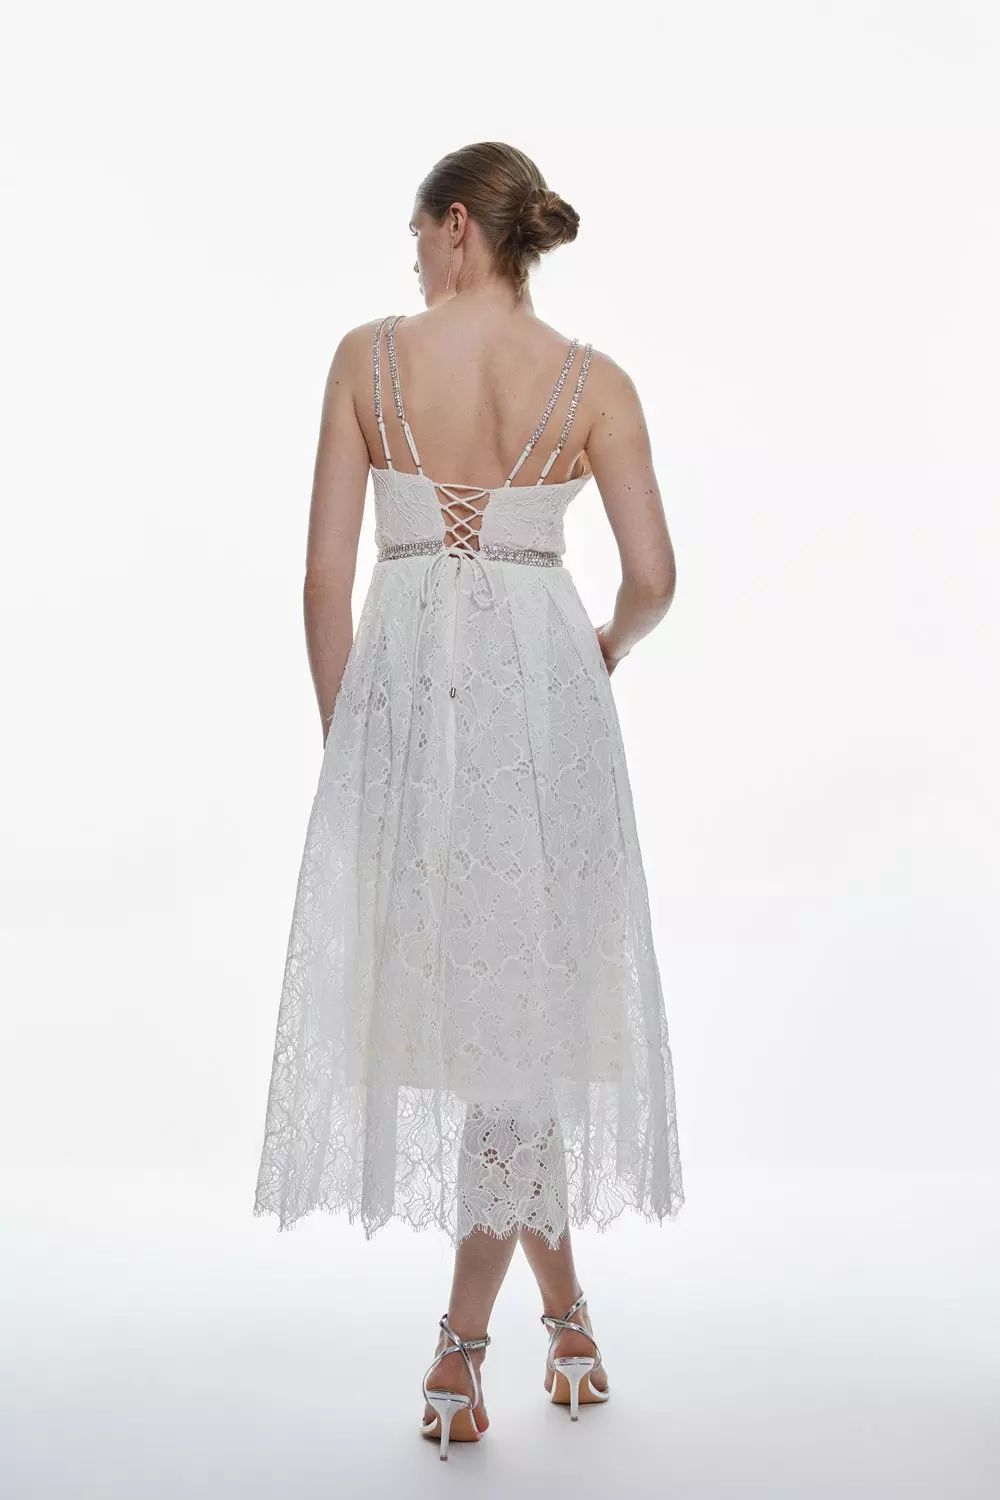 Diamante Trim And Lace Strappy Prom Dress